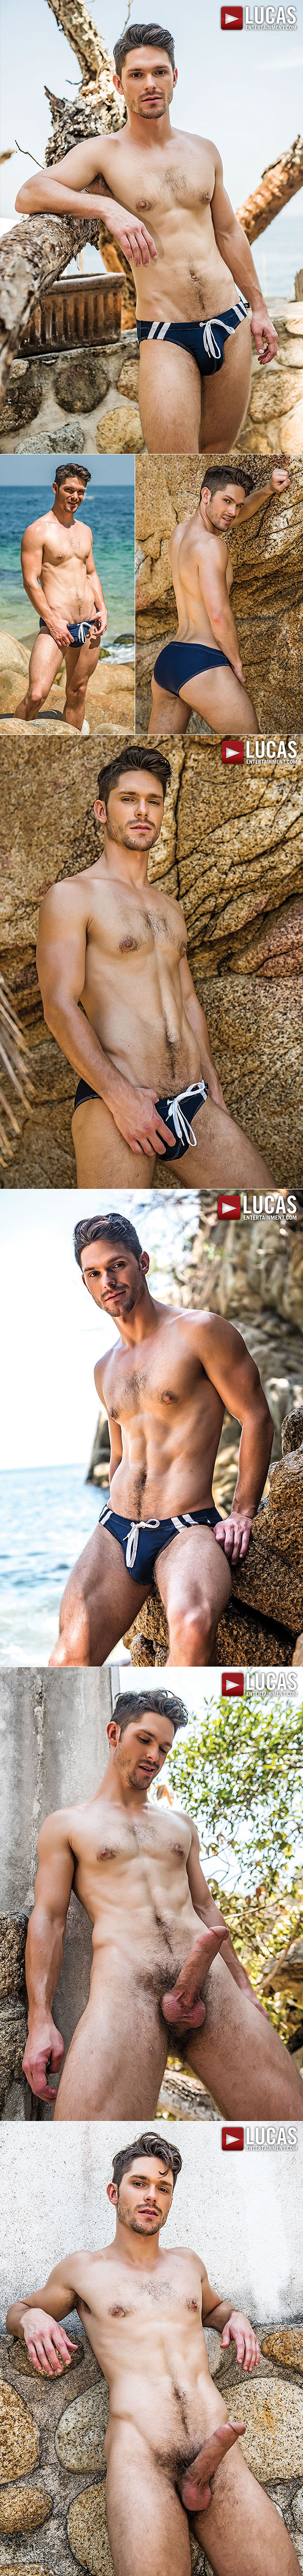 Lucas Entertainment: Alejandro Castillo tops Devin Franco in "Beach Blanket Bareback"